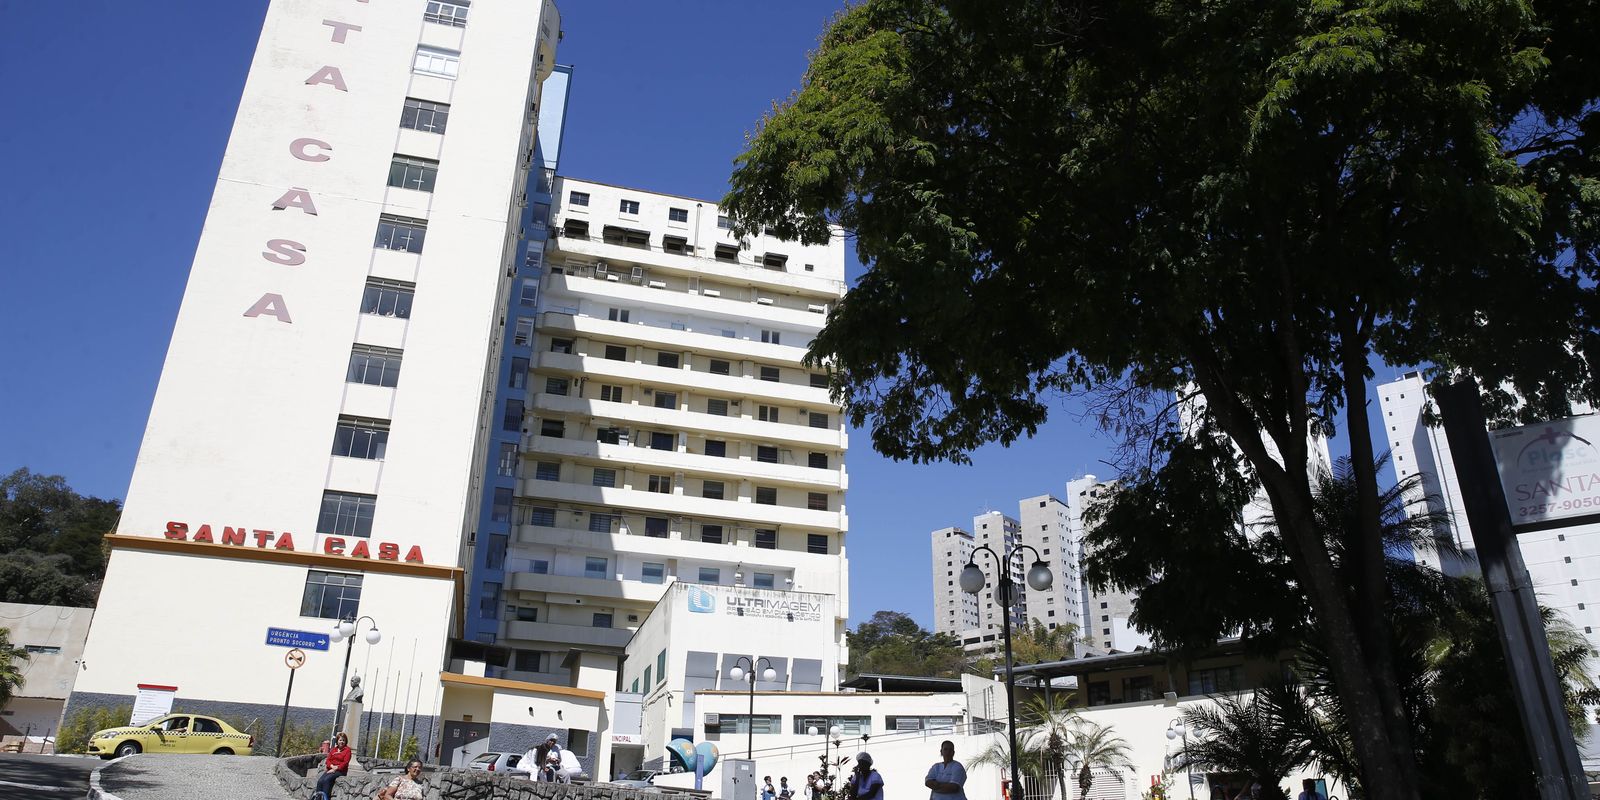 Fuiz de Fora - Santa Casa de Misericórdia, hospital onde o deputado Jair Bolsonaro foi atendido após ser esfaqueado Foto: Tomaz Silva/Agência Brasil